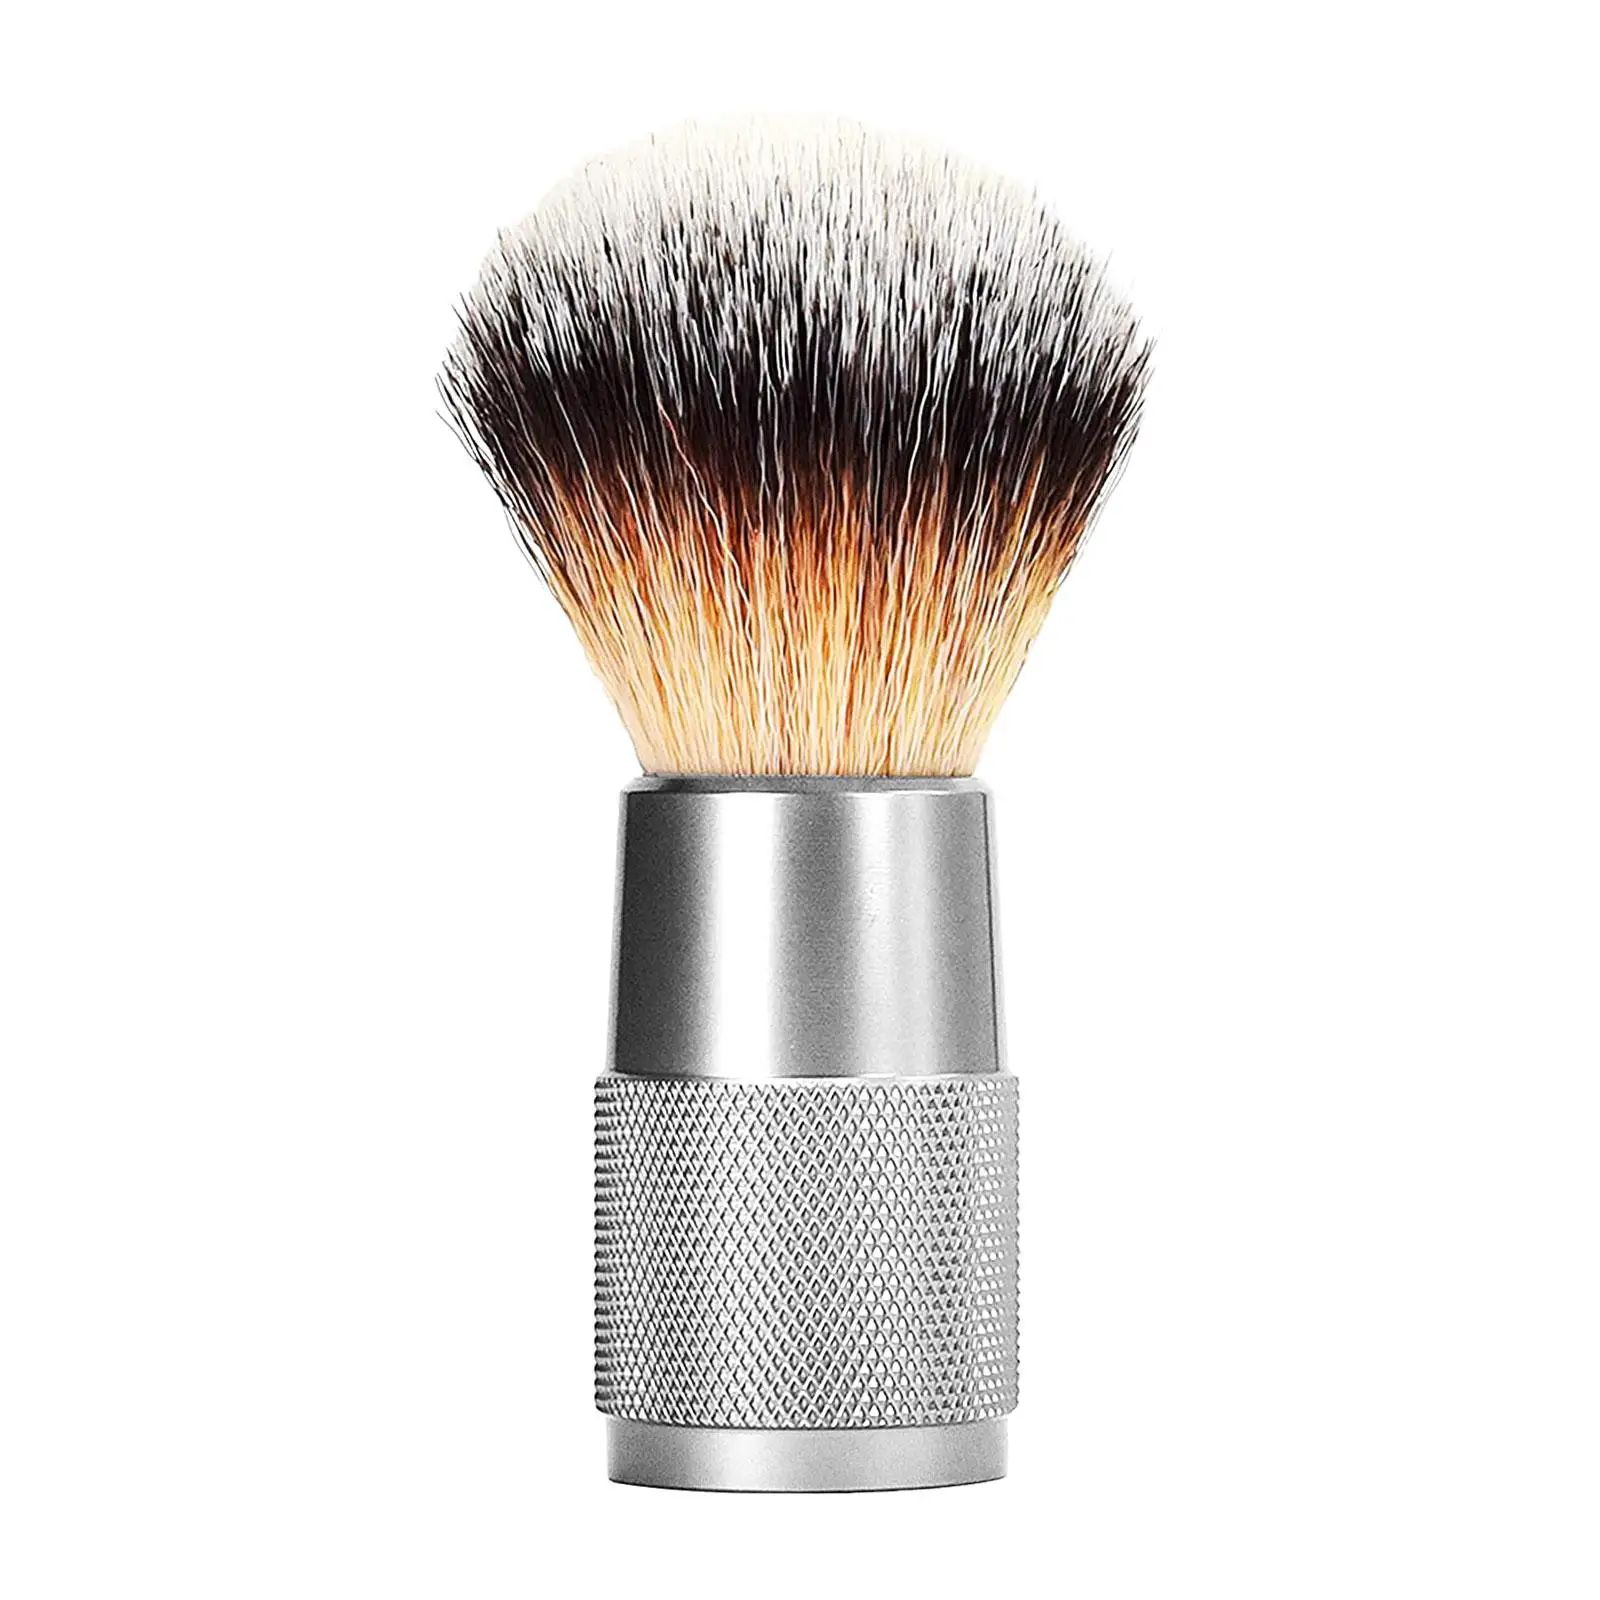 Beard Shaving Brush Lightweight Shaving Accessory Birthday Gift Durable Hair Salon Tool Nylon Synthetic Bristles Aluminum Handle